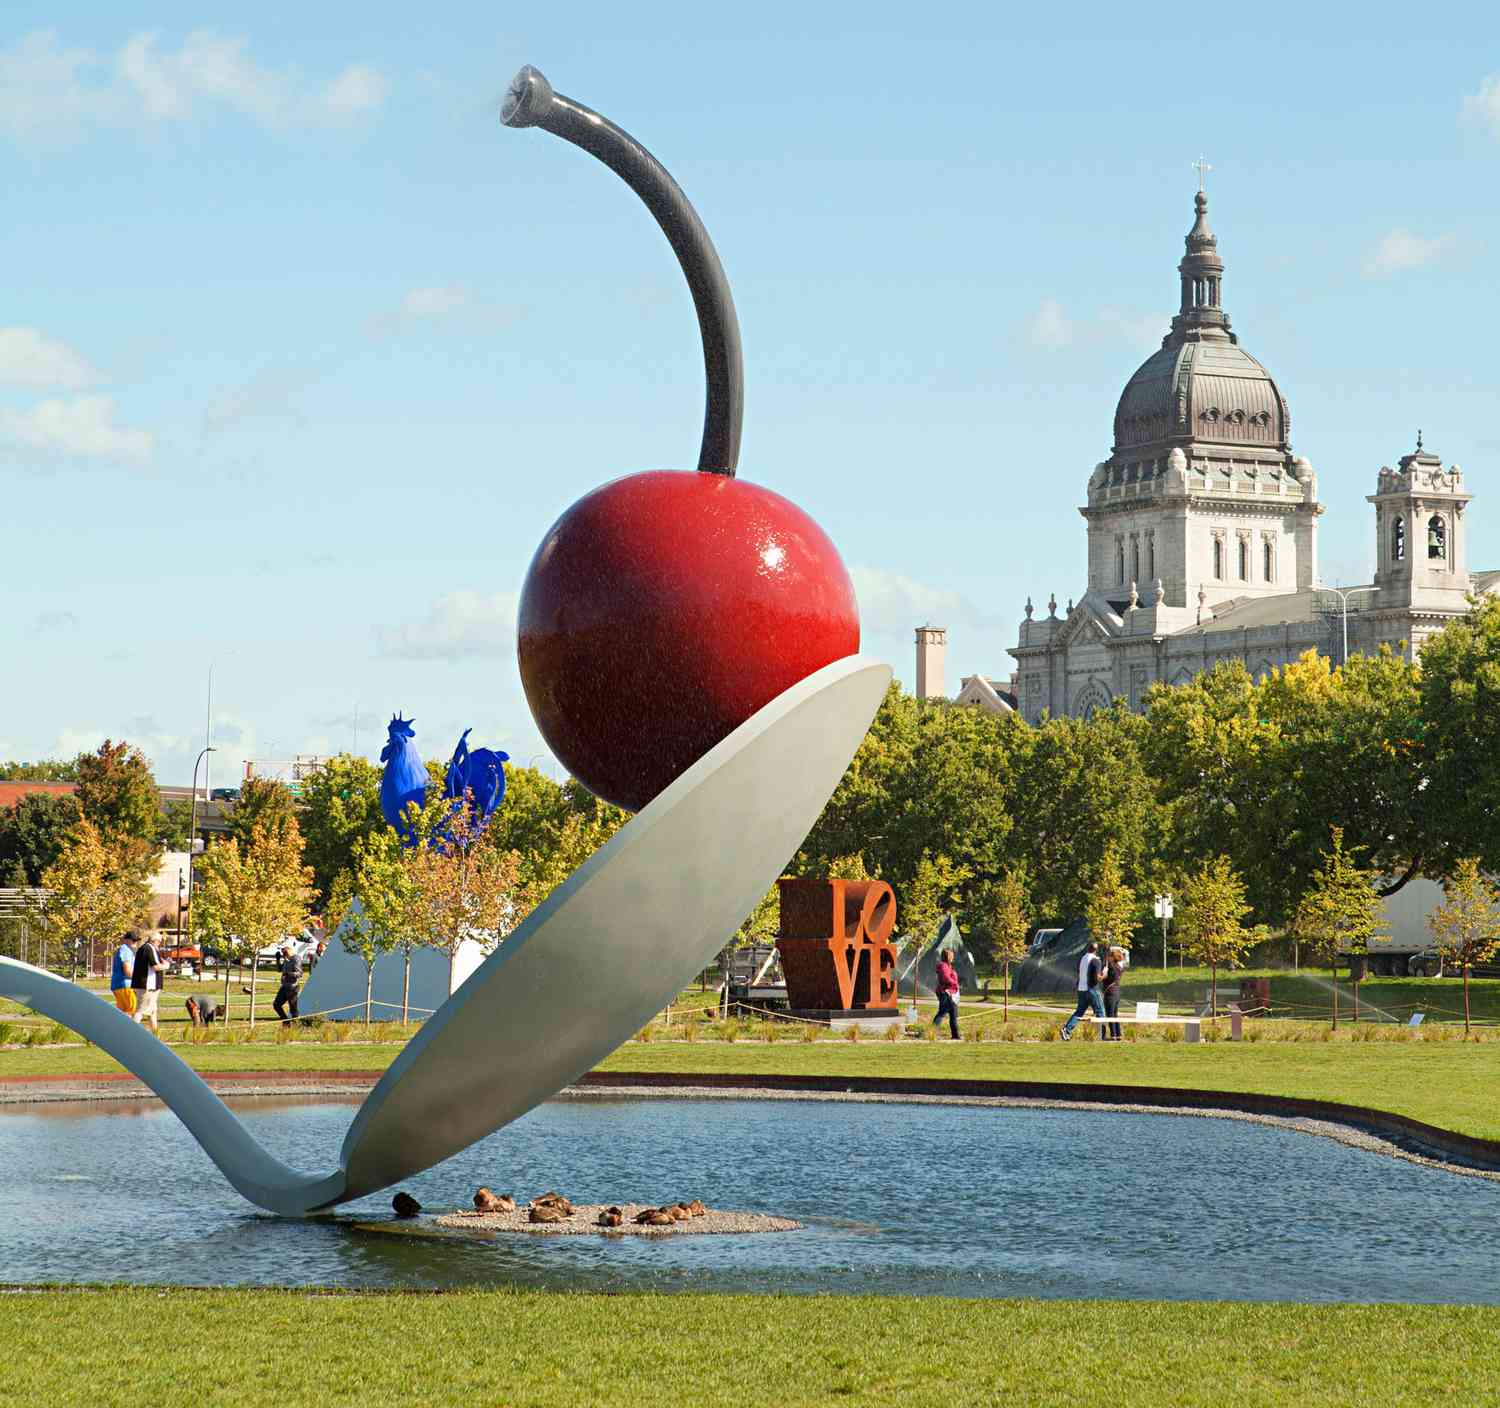 Minneapolis Sculpture Garden